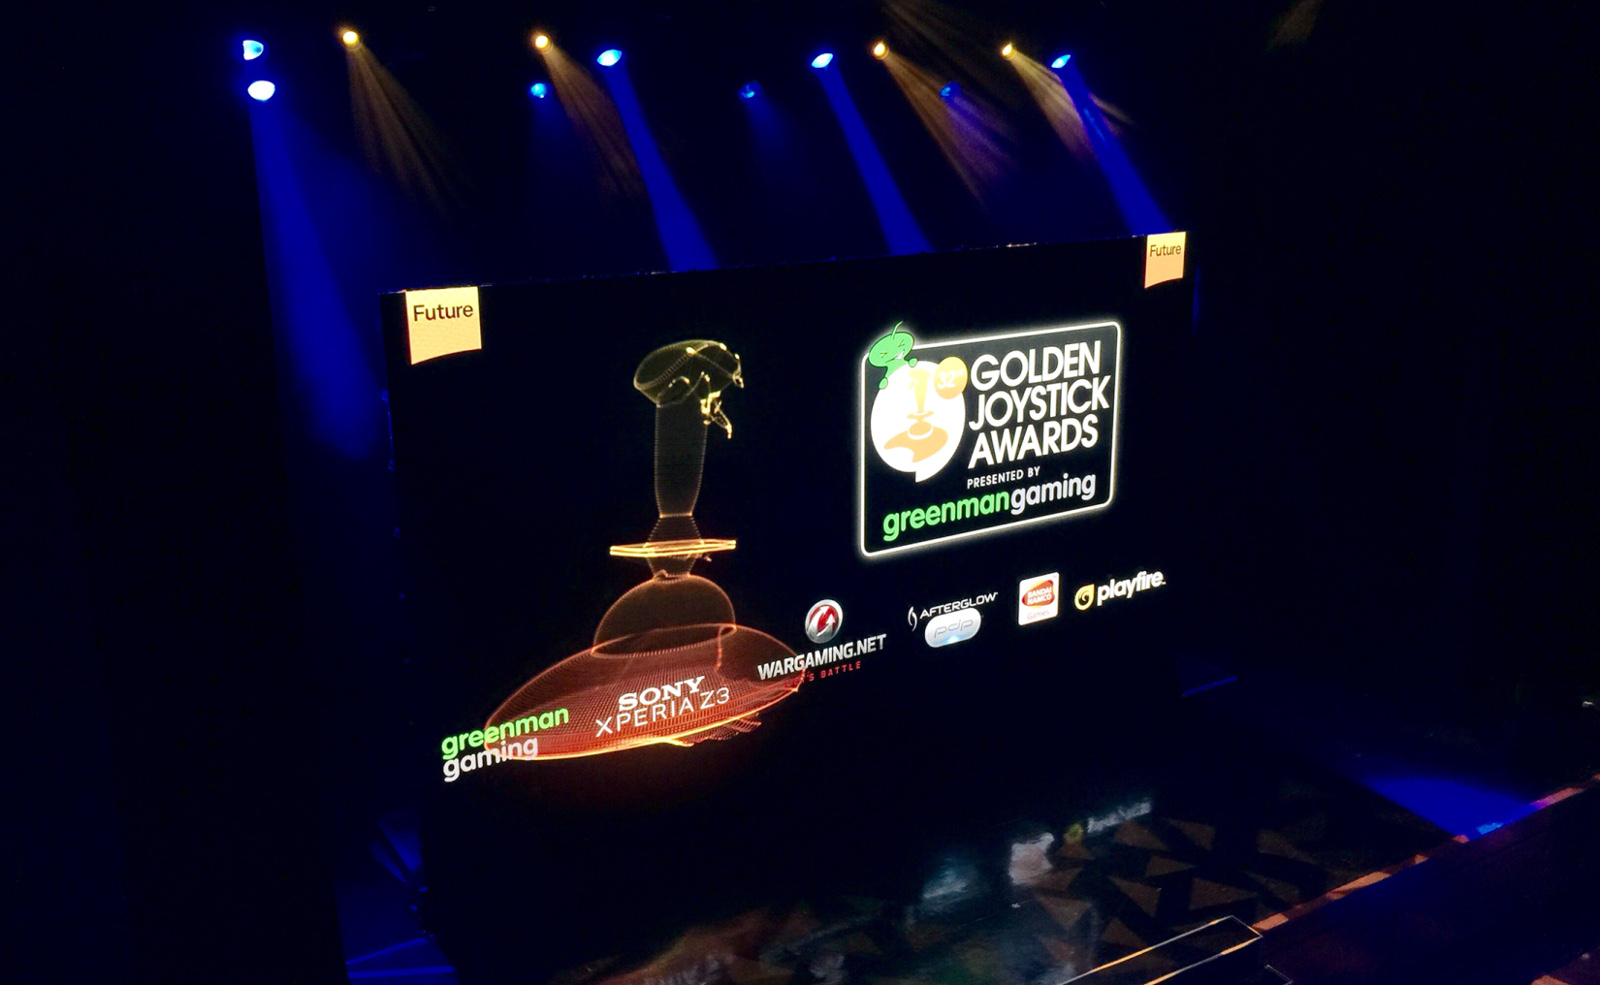 Golden Joystick Awards - Wikipedia